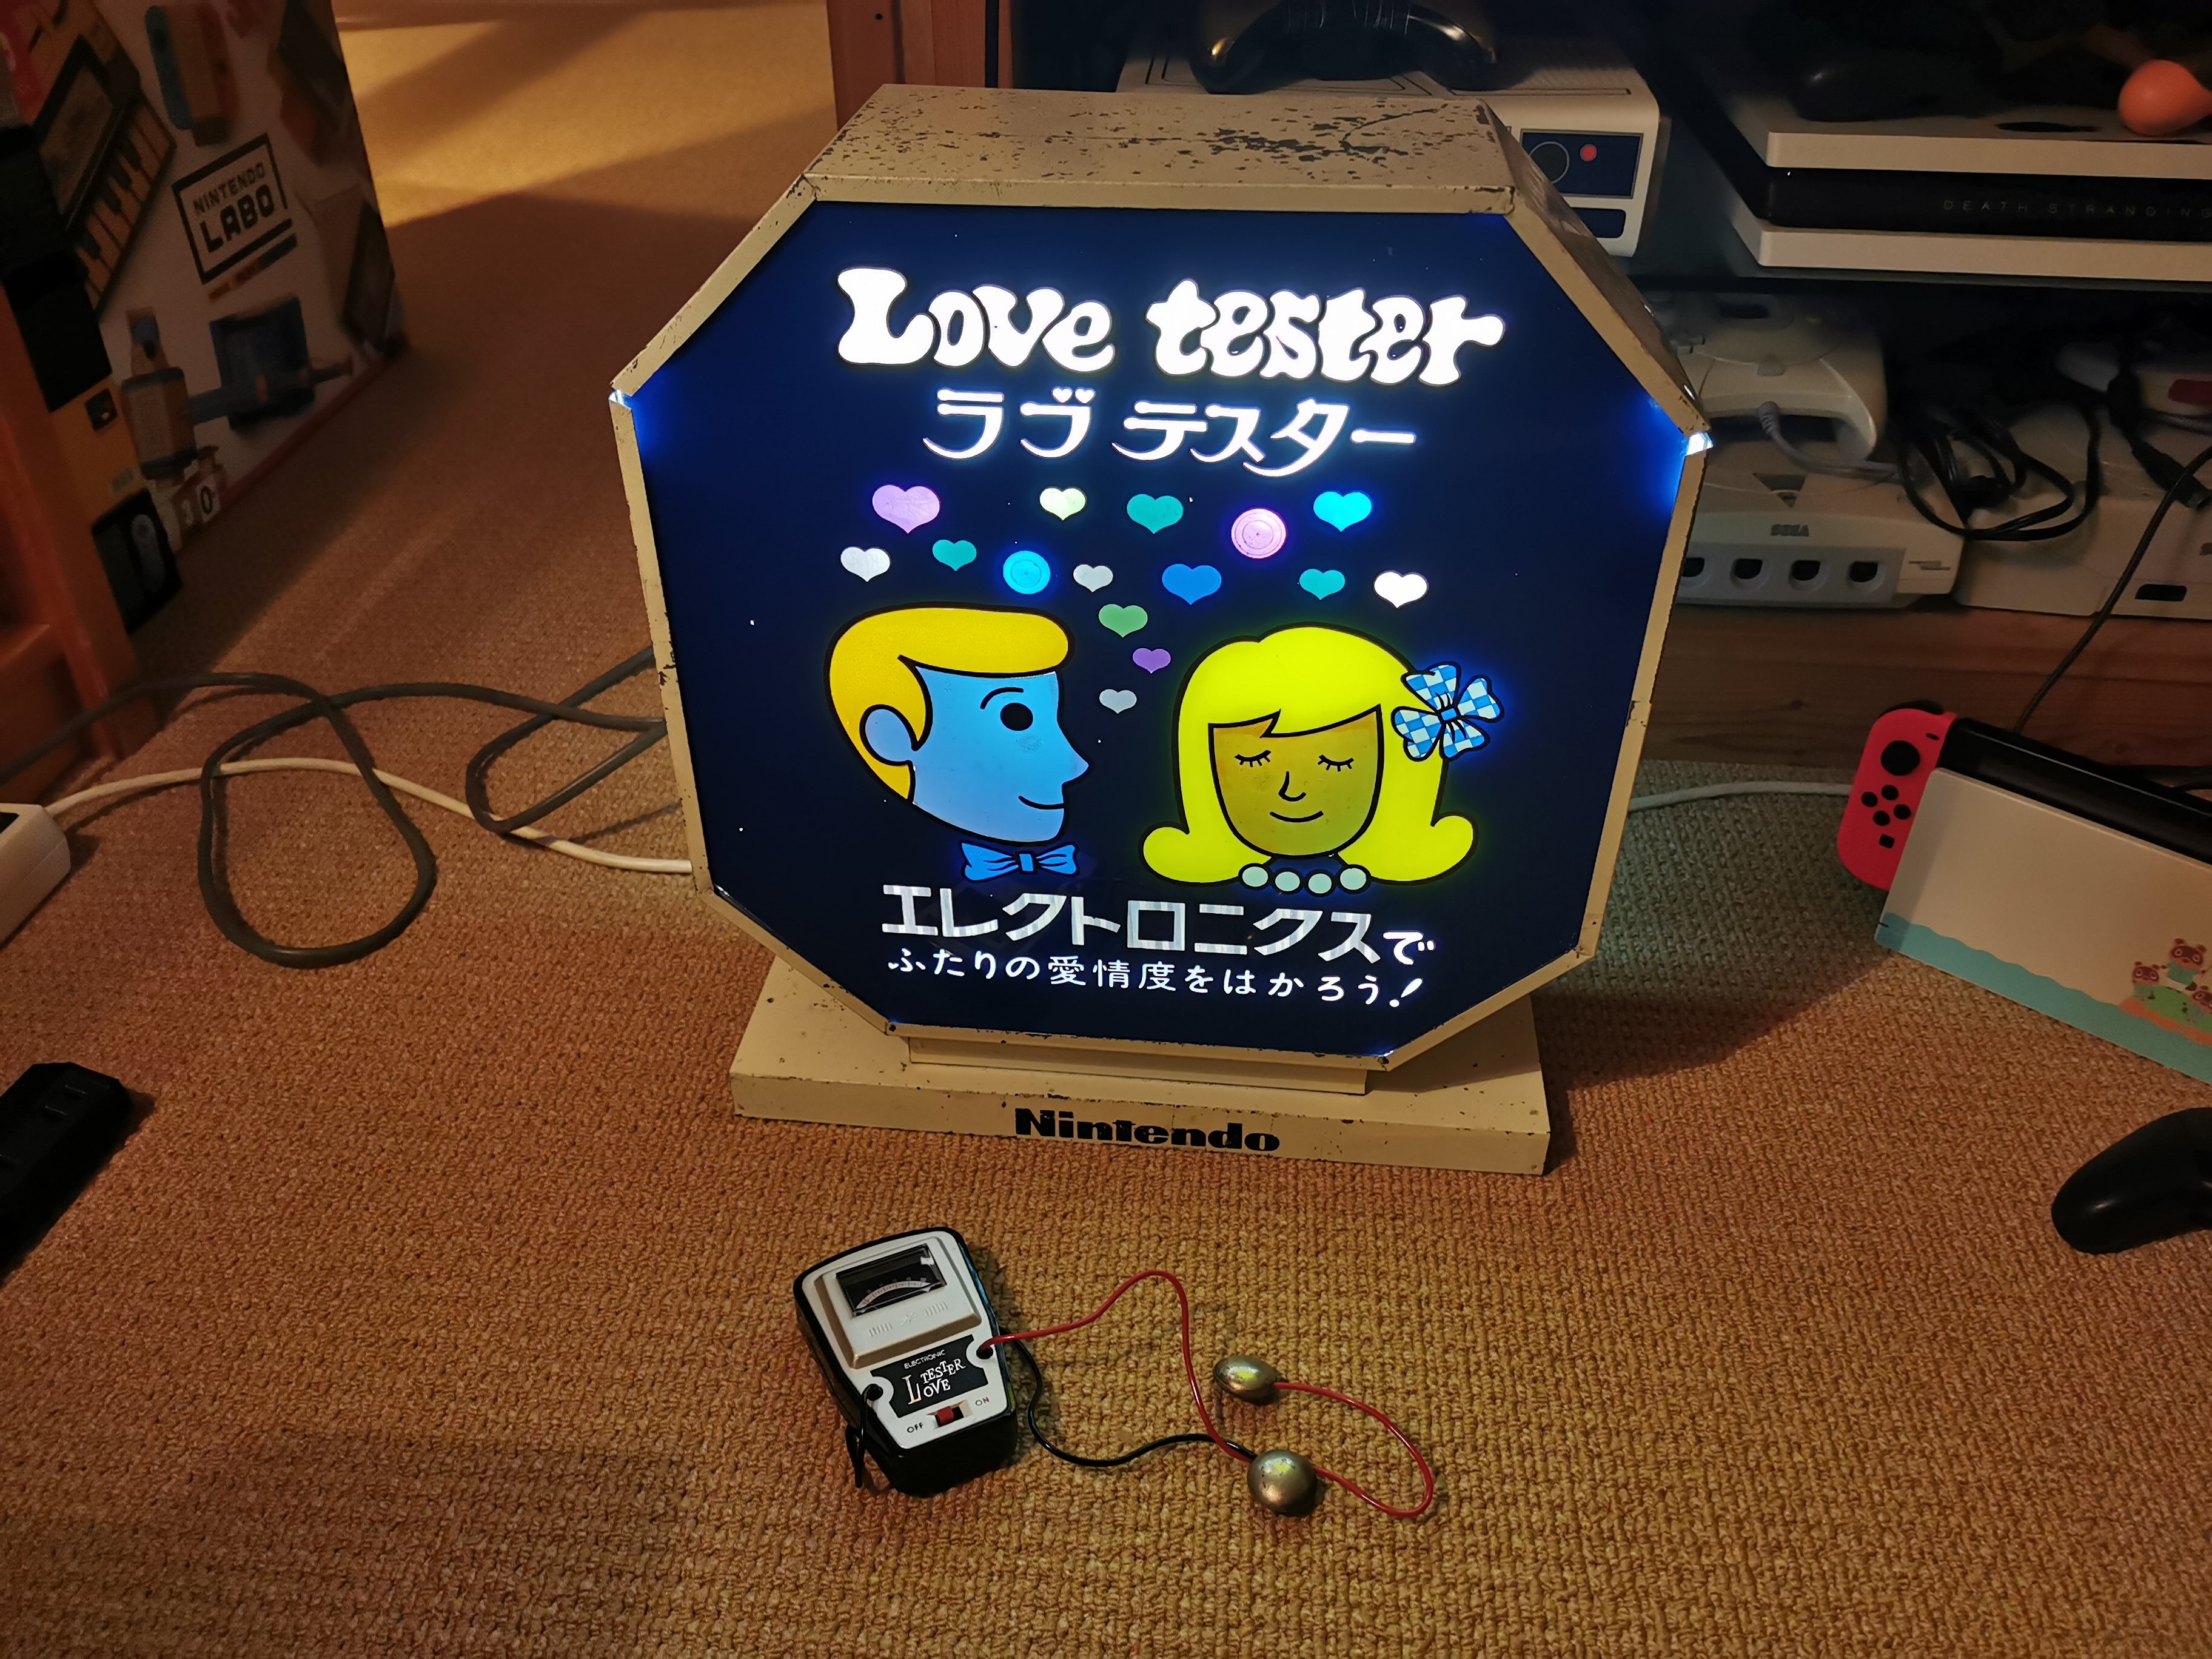 beforemario: Nintendo Love Tester (ラブテスター, 1969)